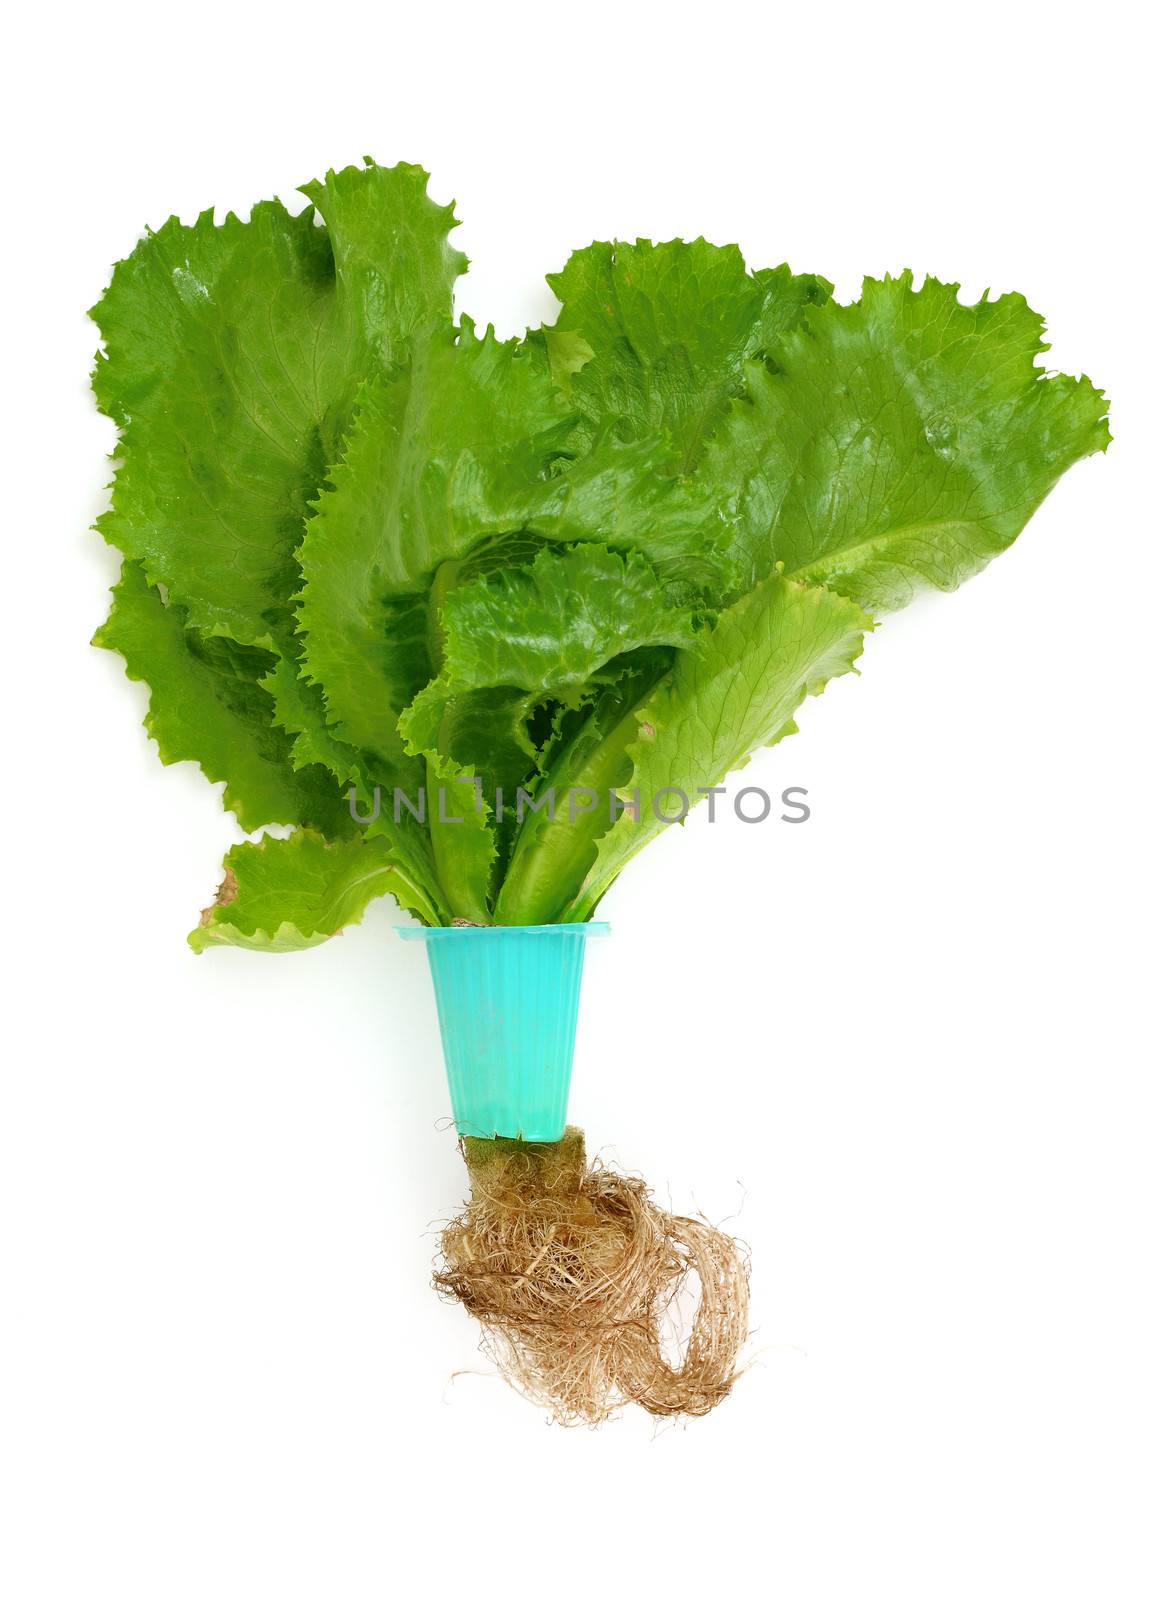 Hydroponic Lettuce